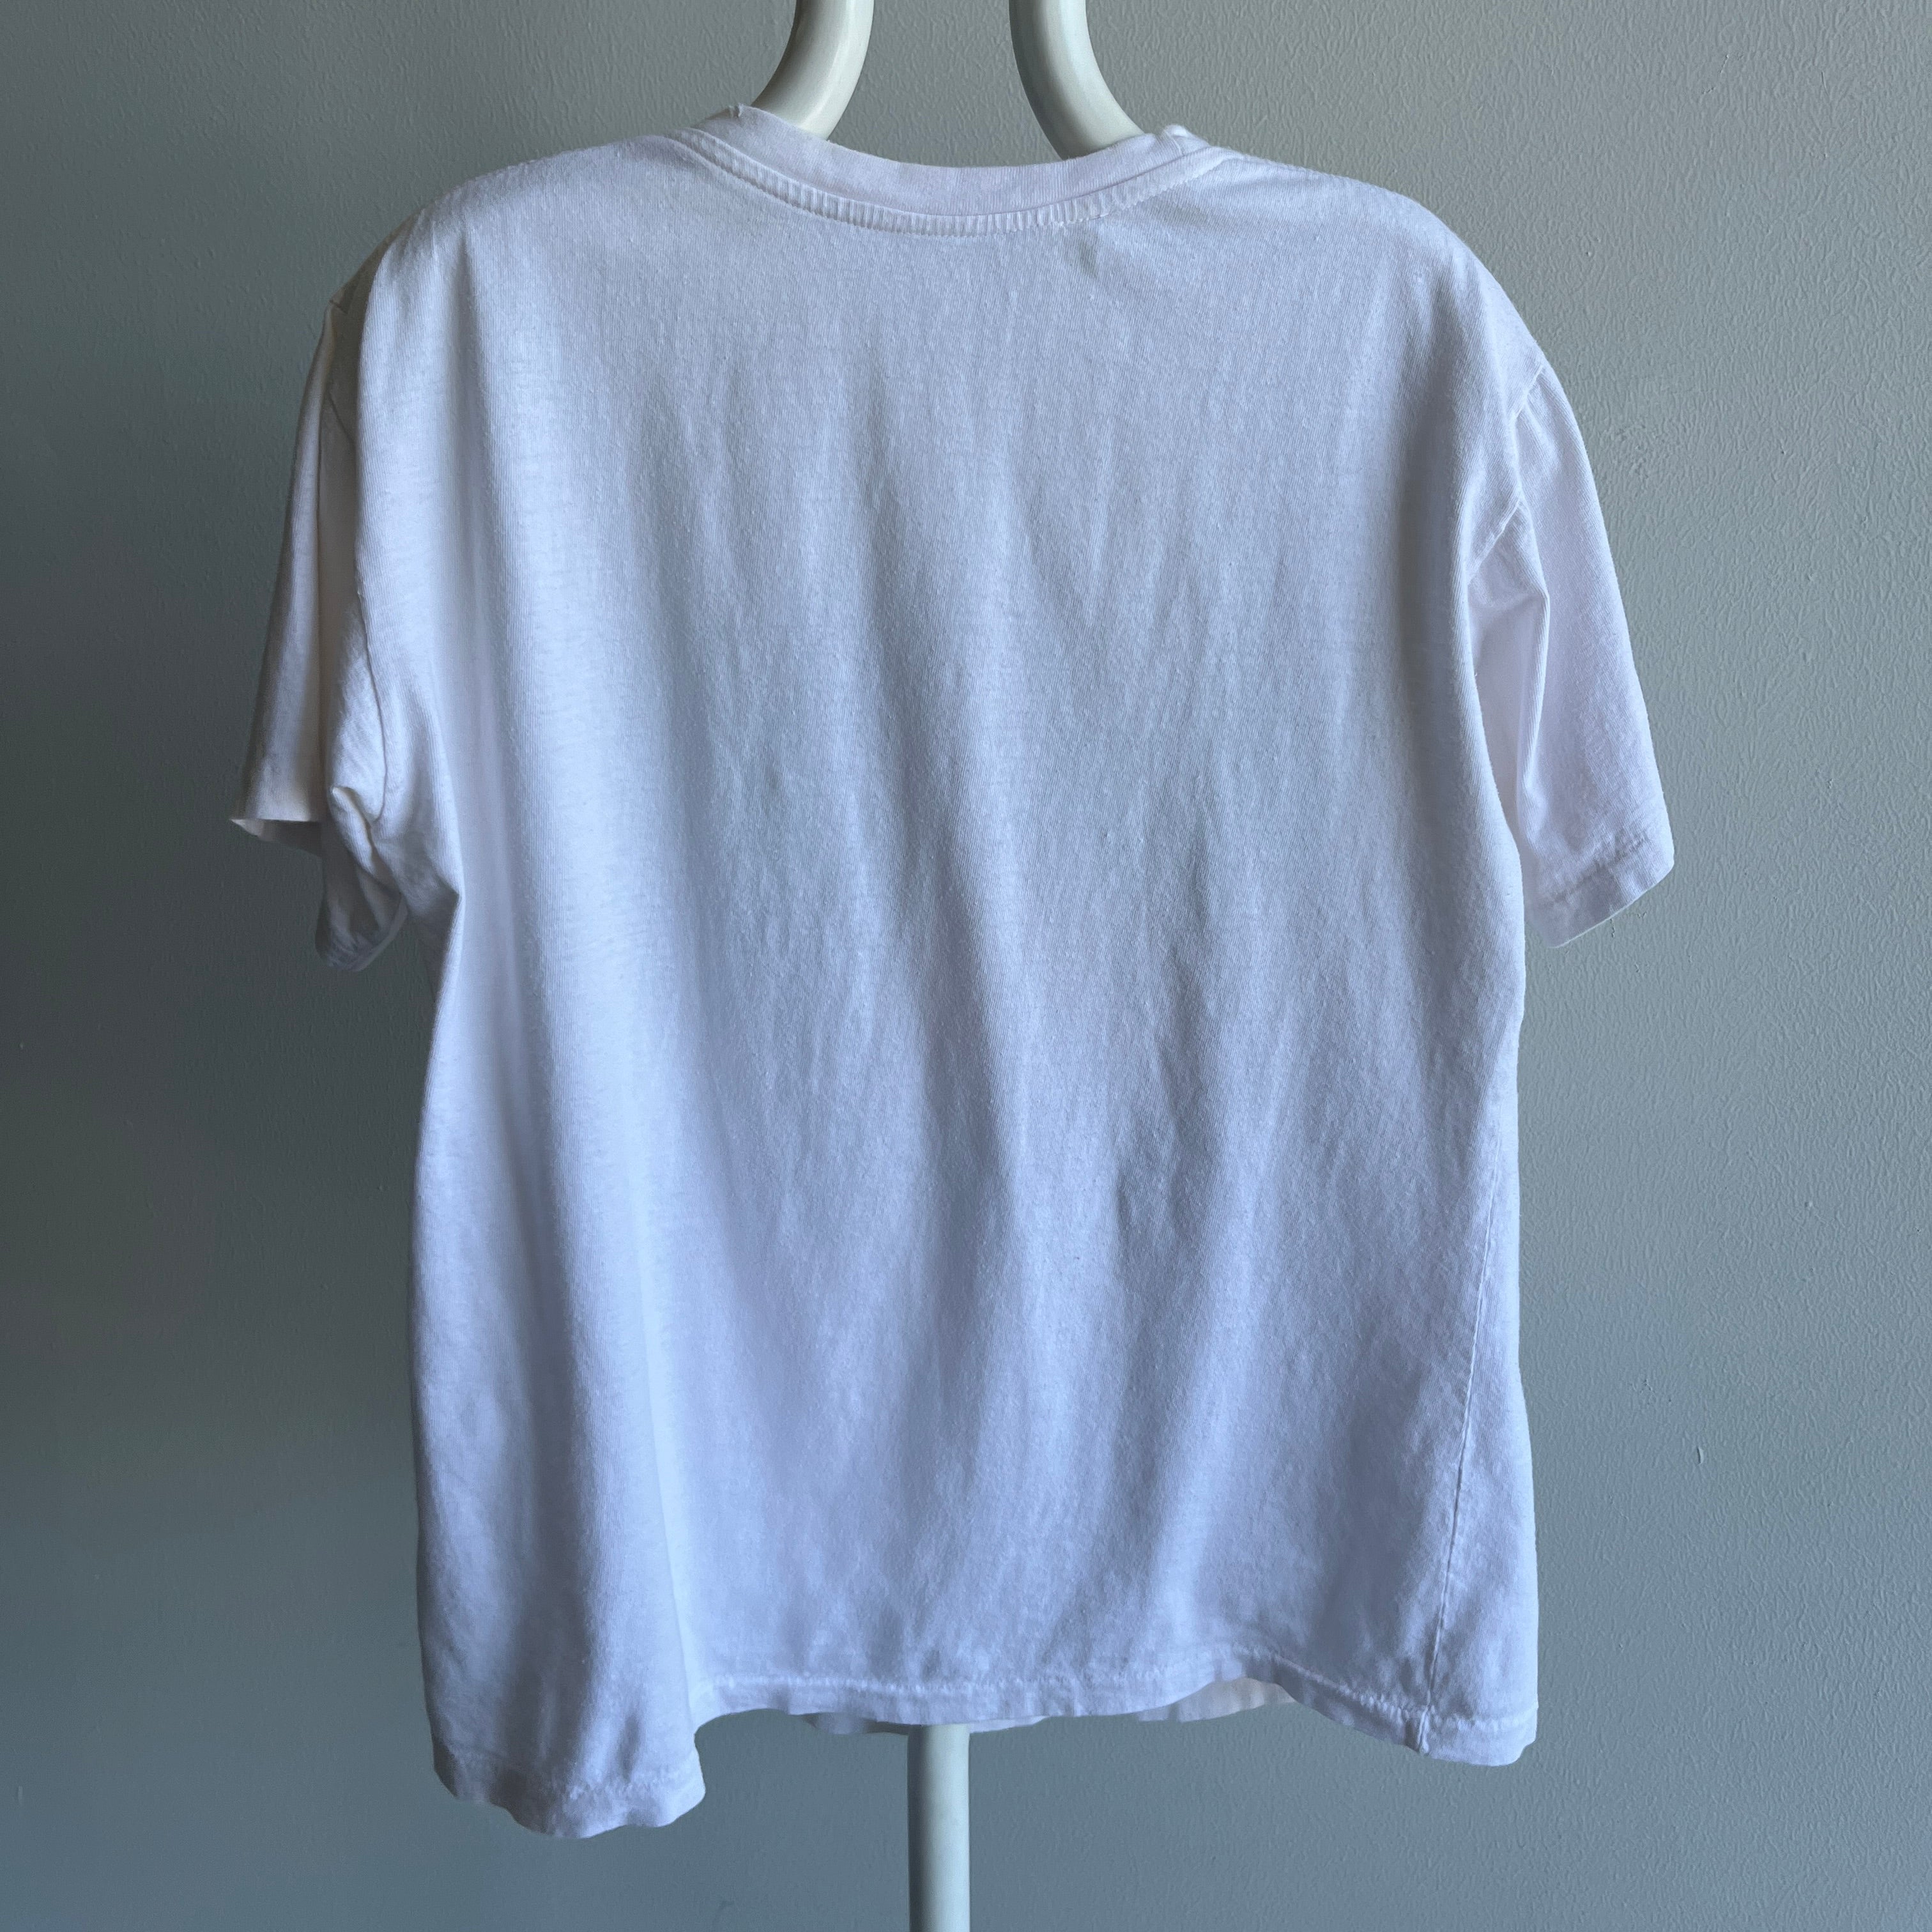 1990s Venice Beach, California Cotton T-Shirt